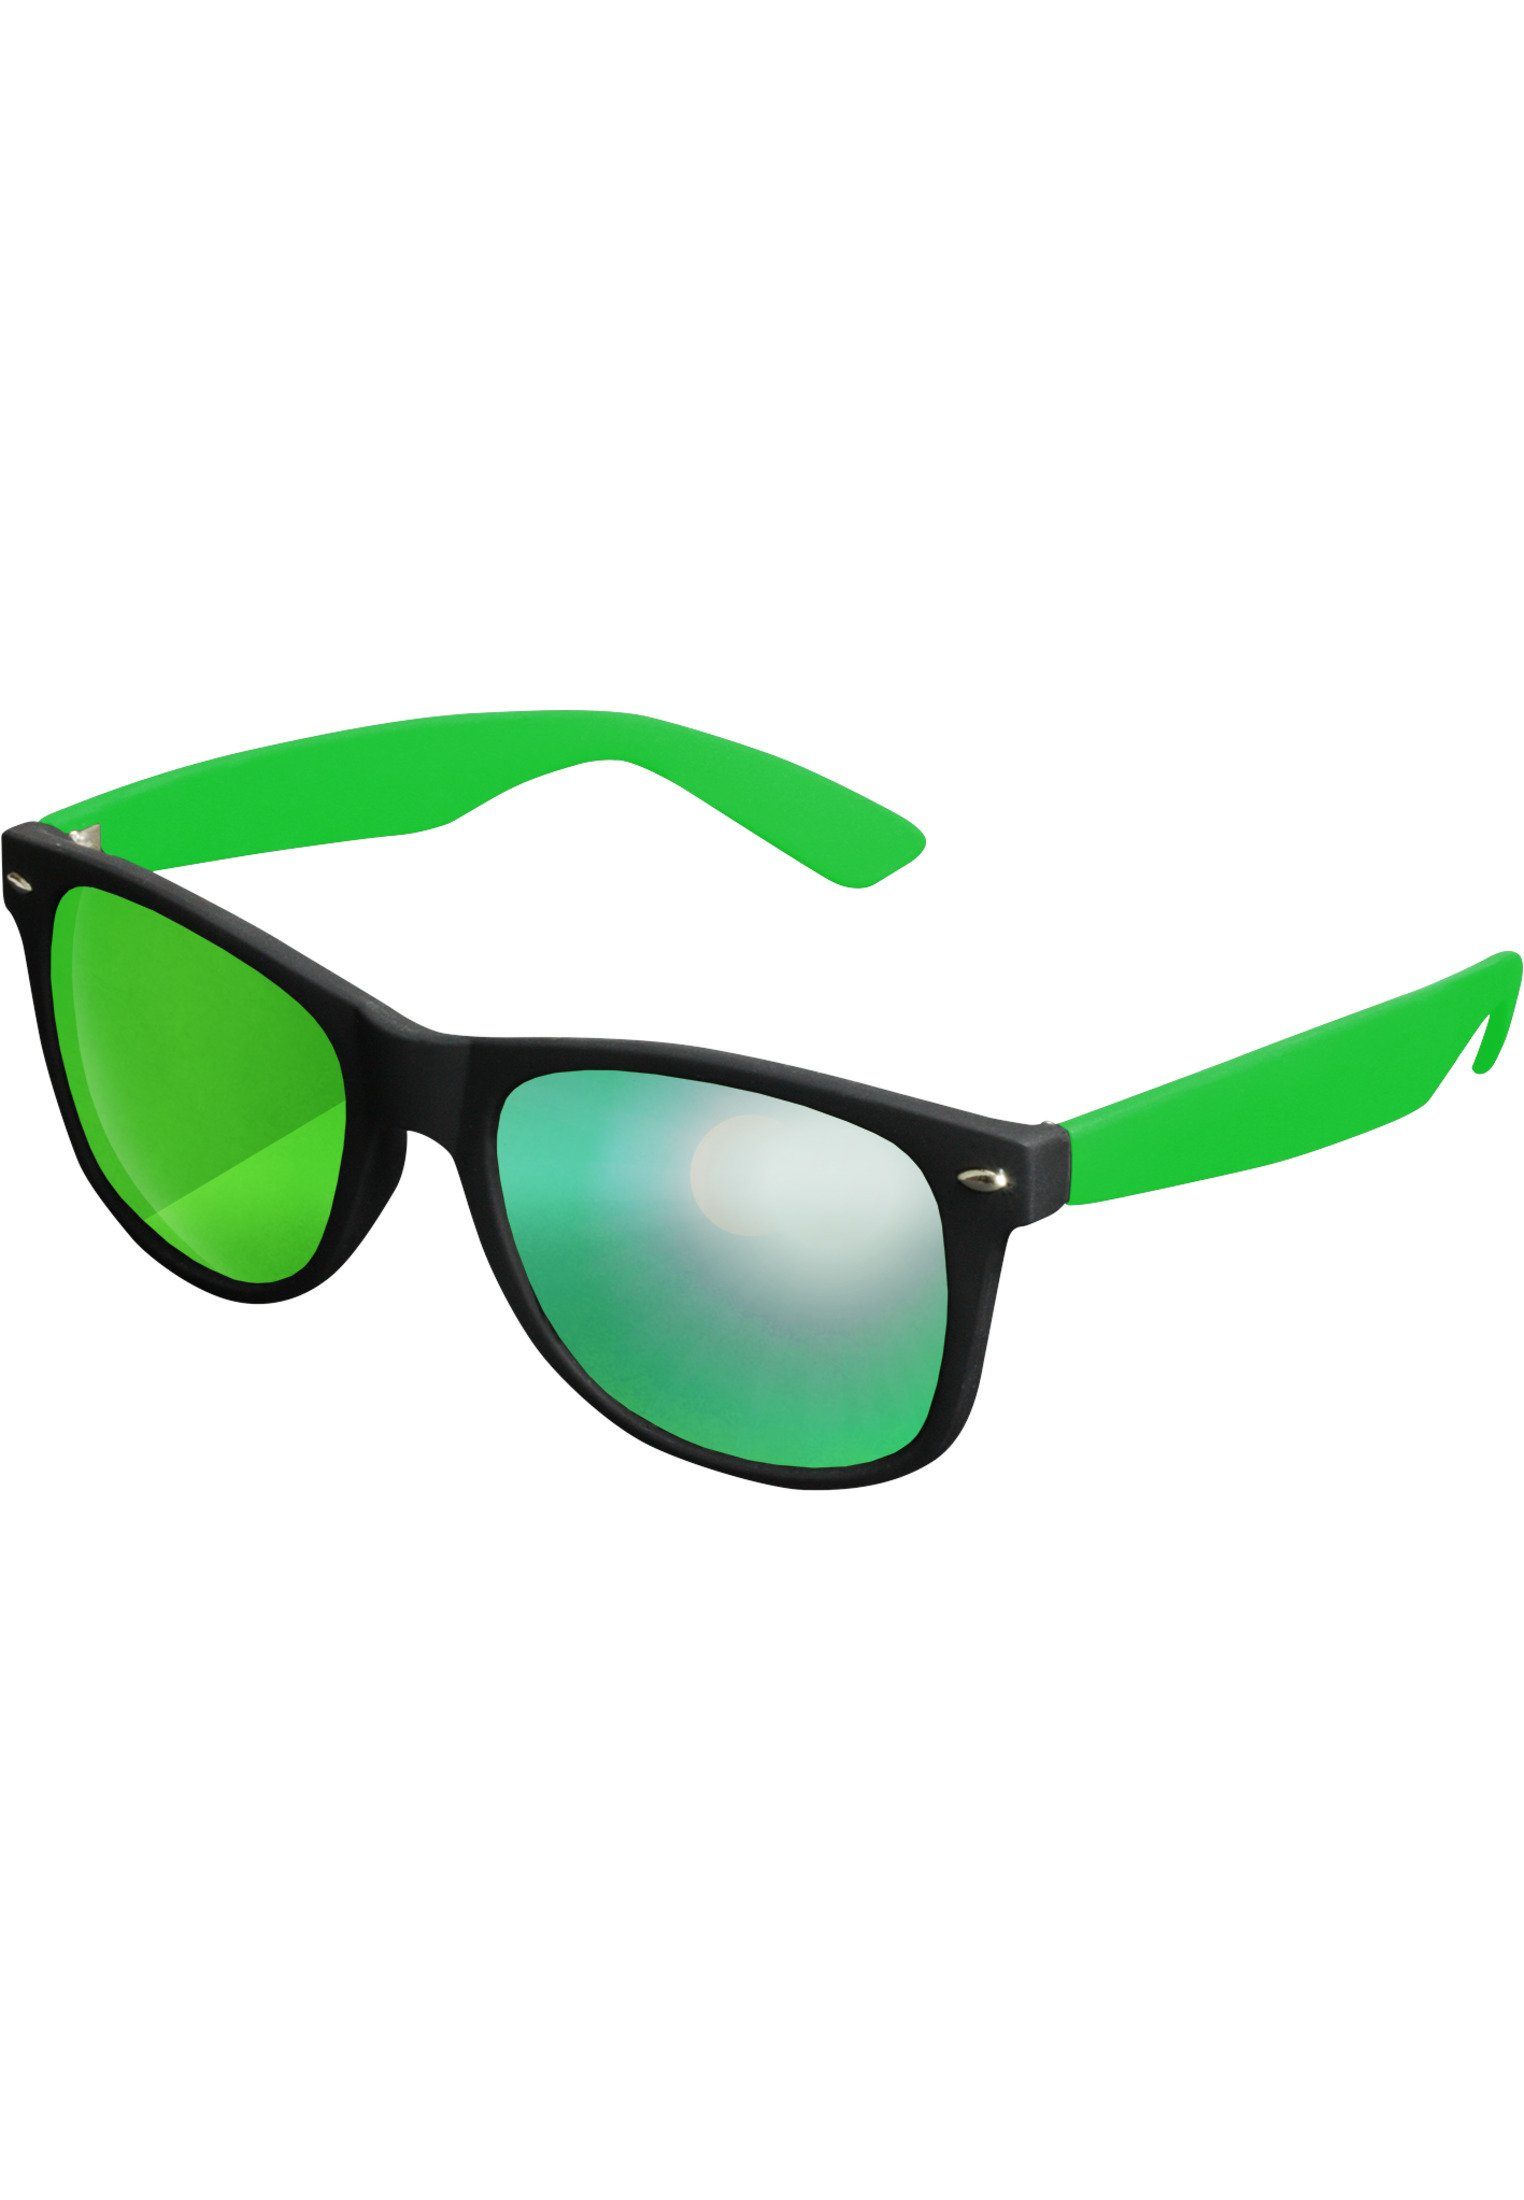 Sunglasses MSTRDS Accessoires Mirror blk/lgr Sonnenbrille Likoma